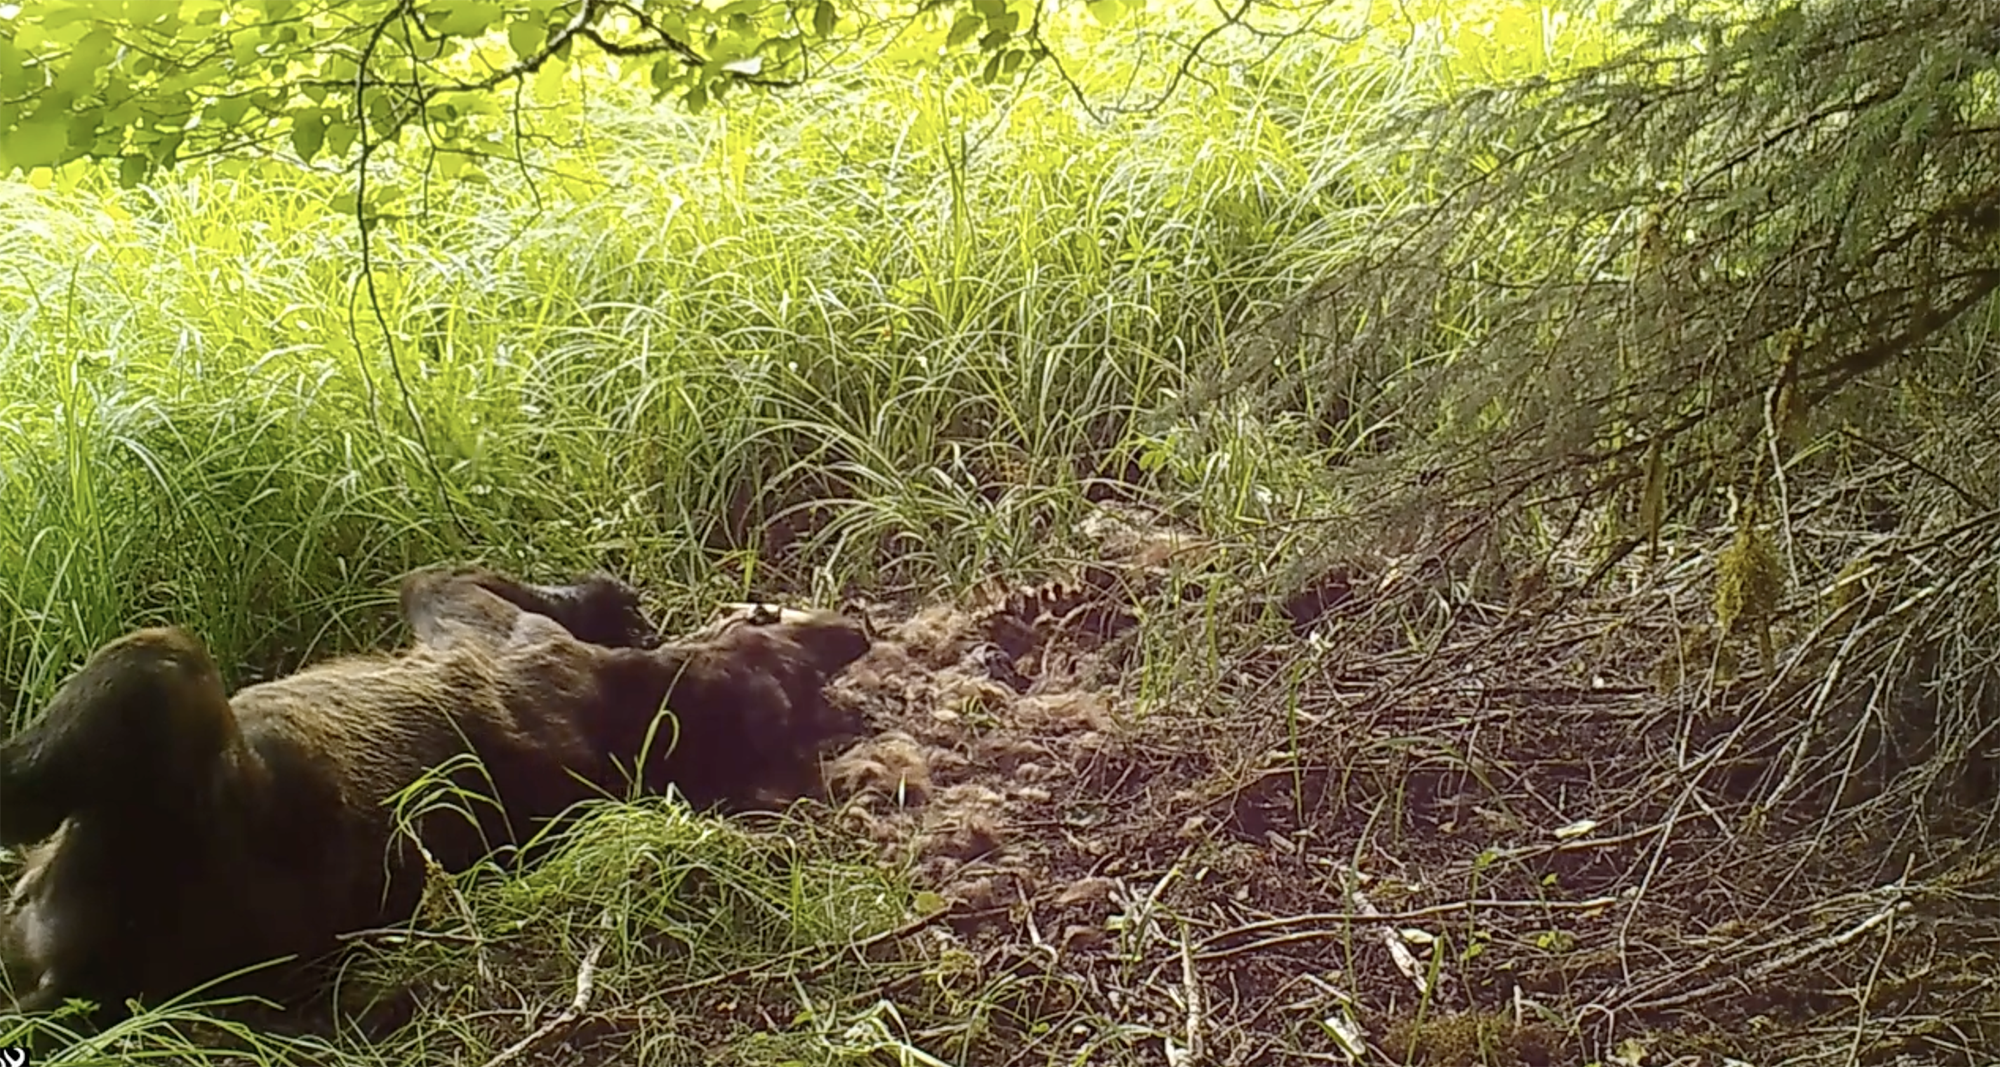 Trail Cam Video: Brown Bear Rolls in a Dead Bear Carcass